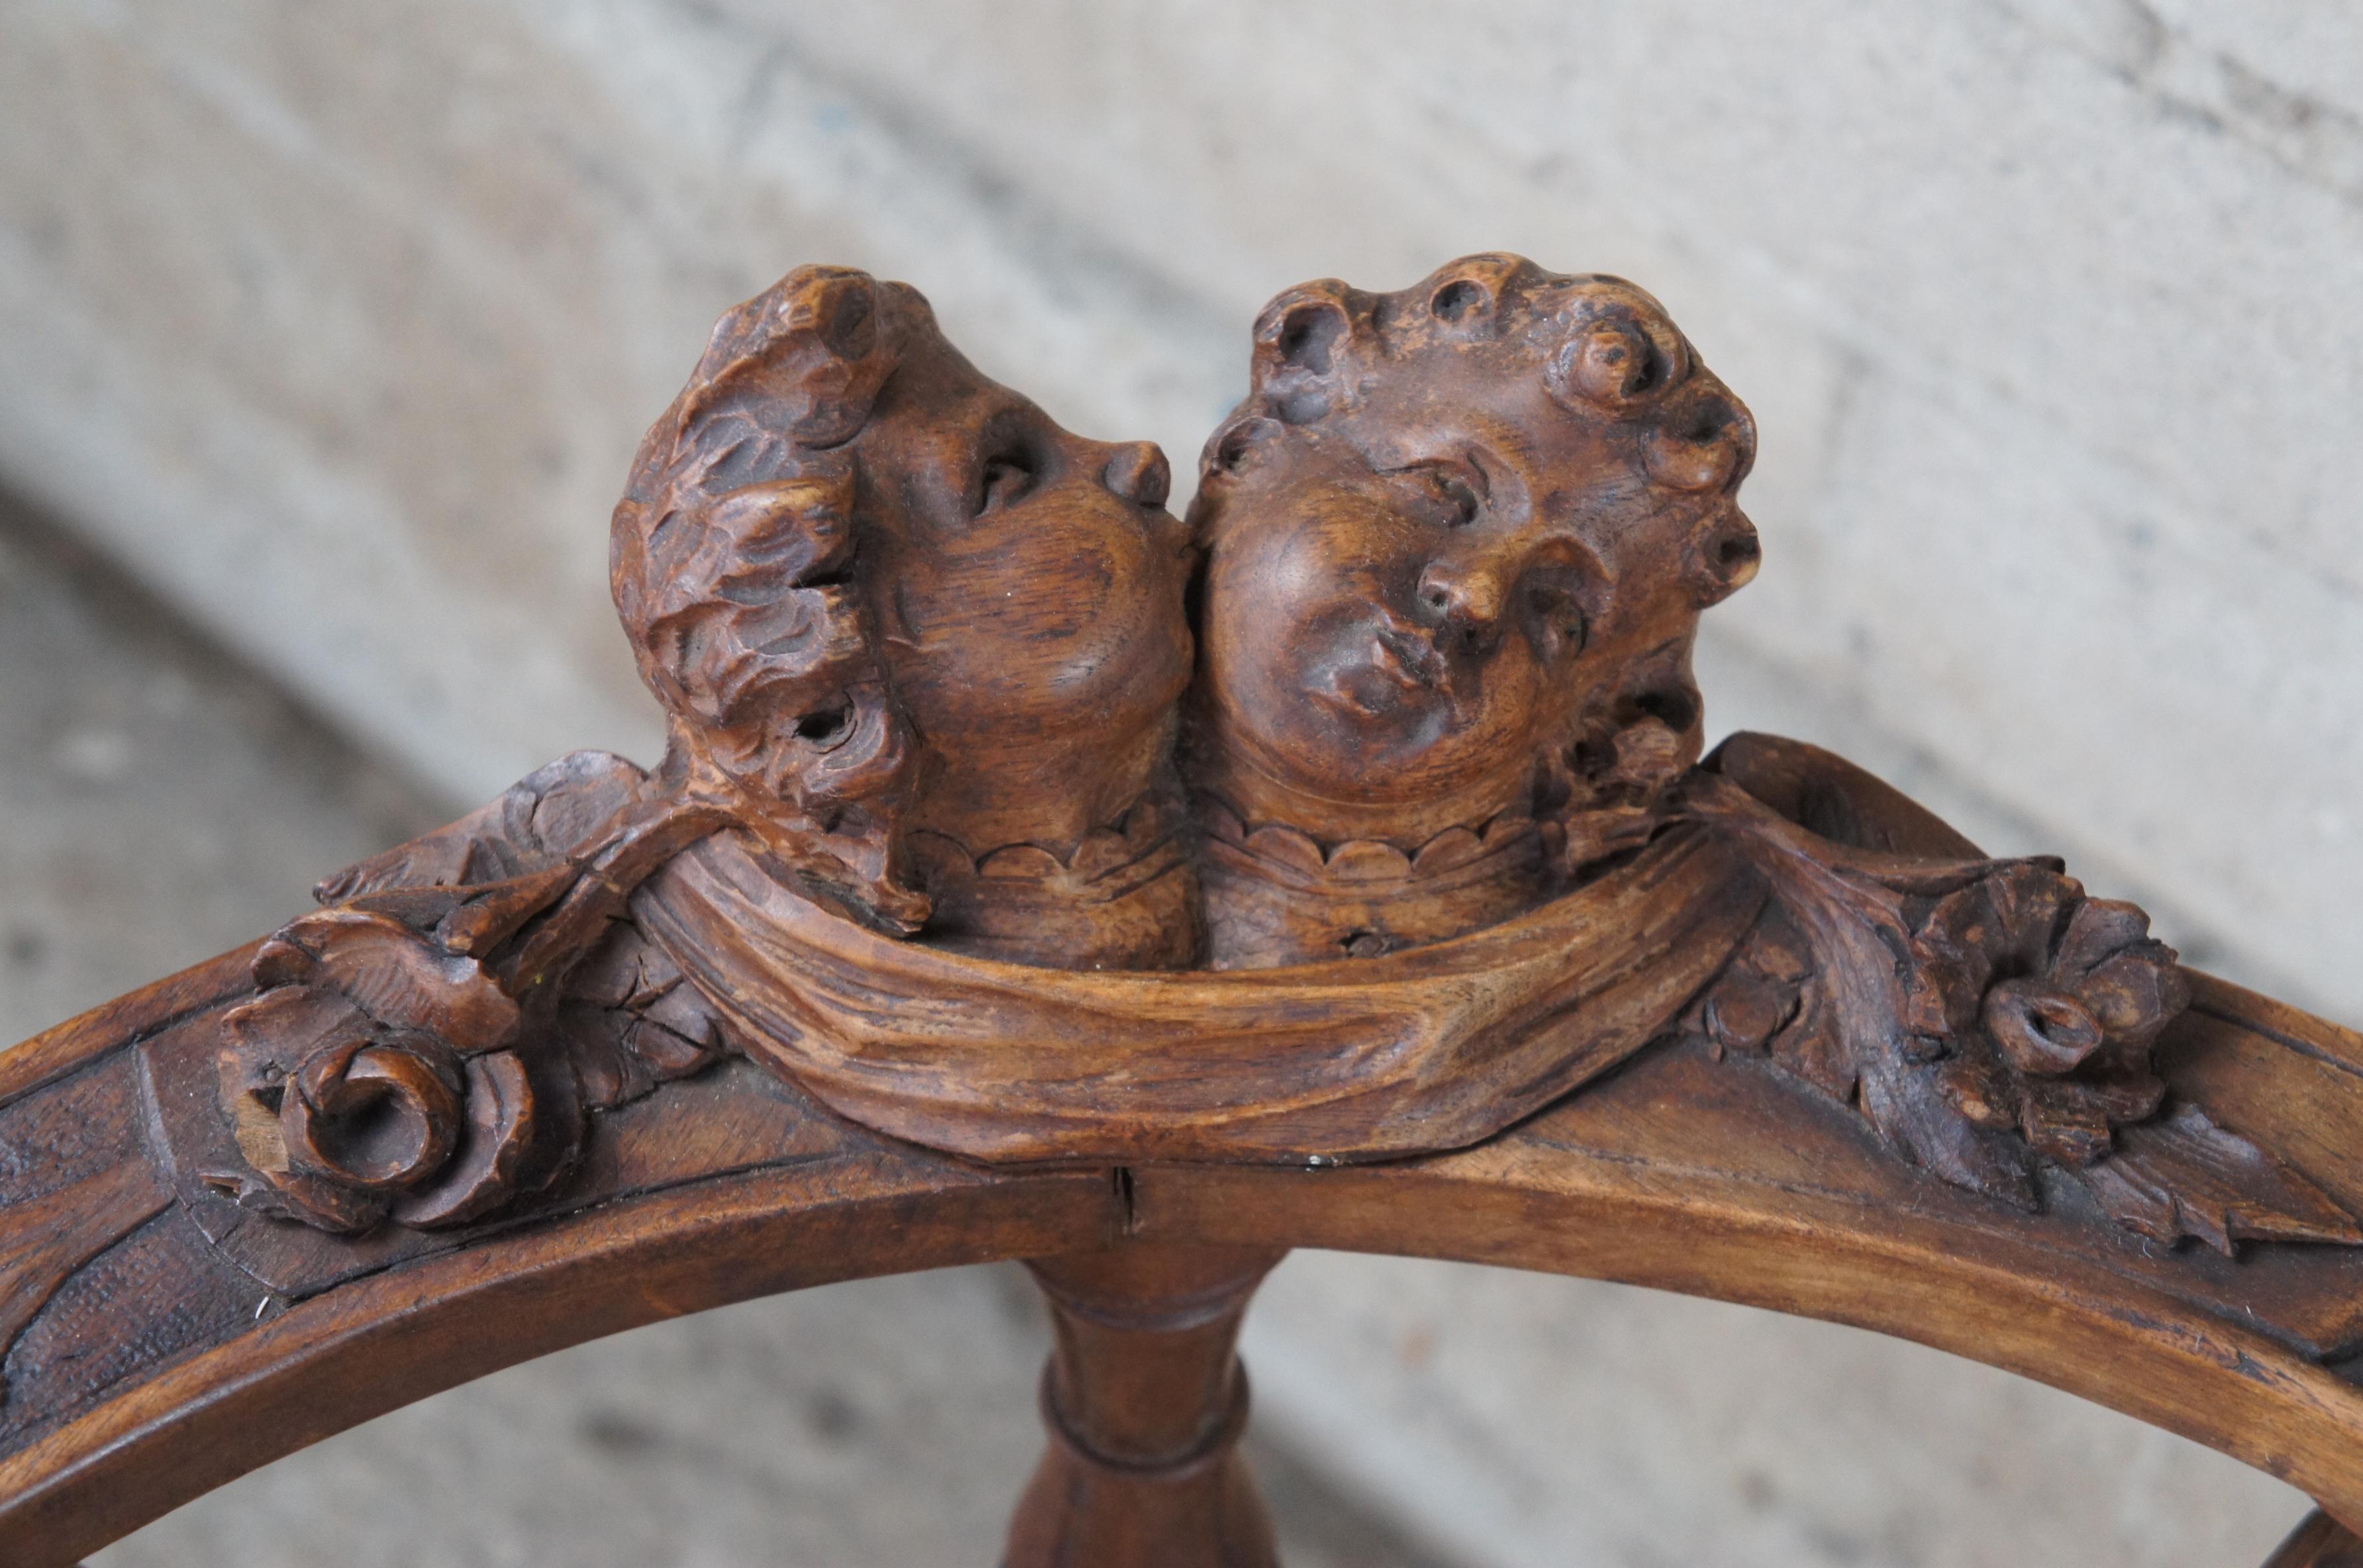 Antikes italienisches Renaissance-Revival-Salon-Sessel aus geschnitztem Nussbaumholz, Loveseat, 60